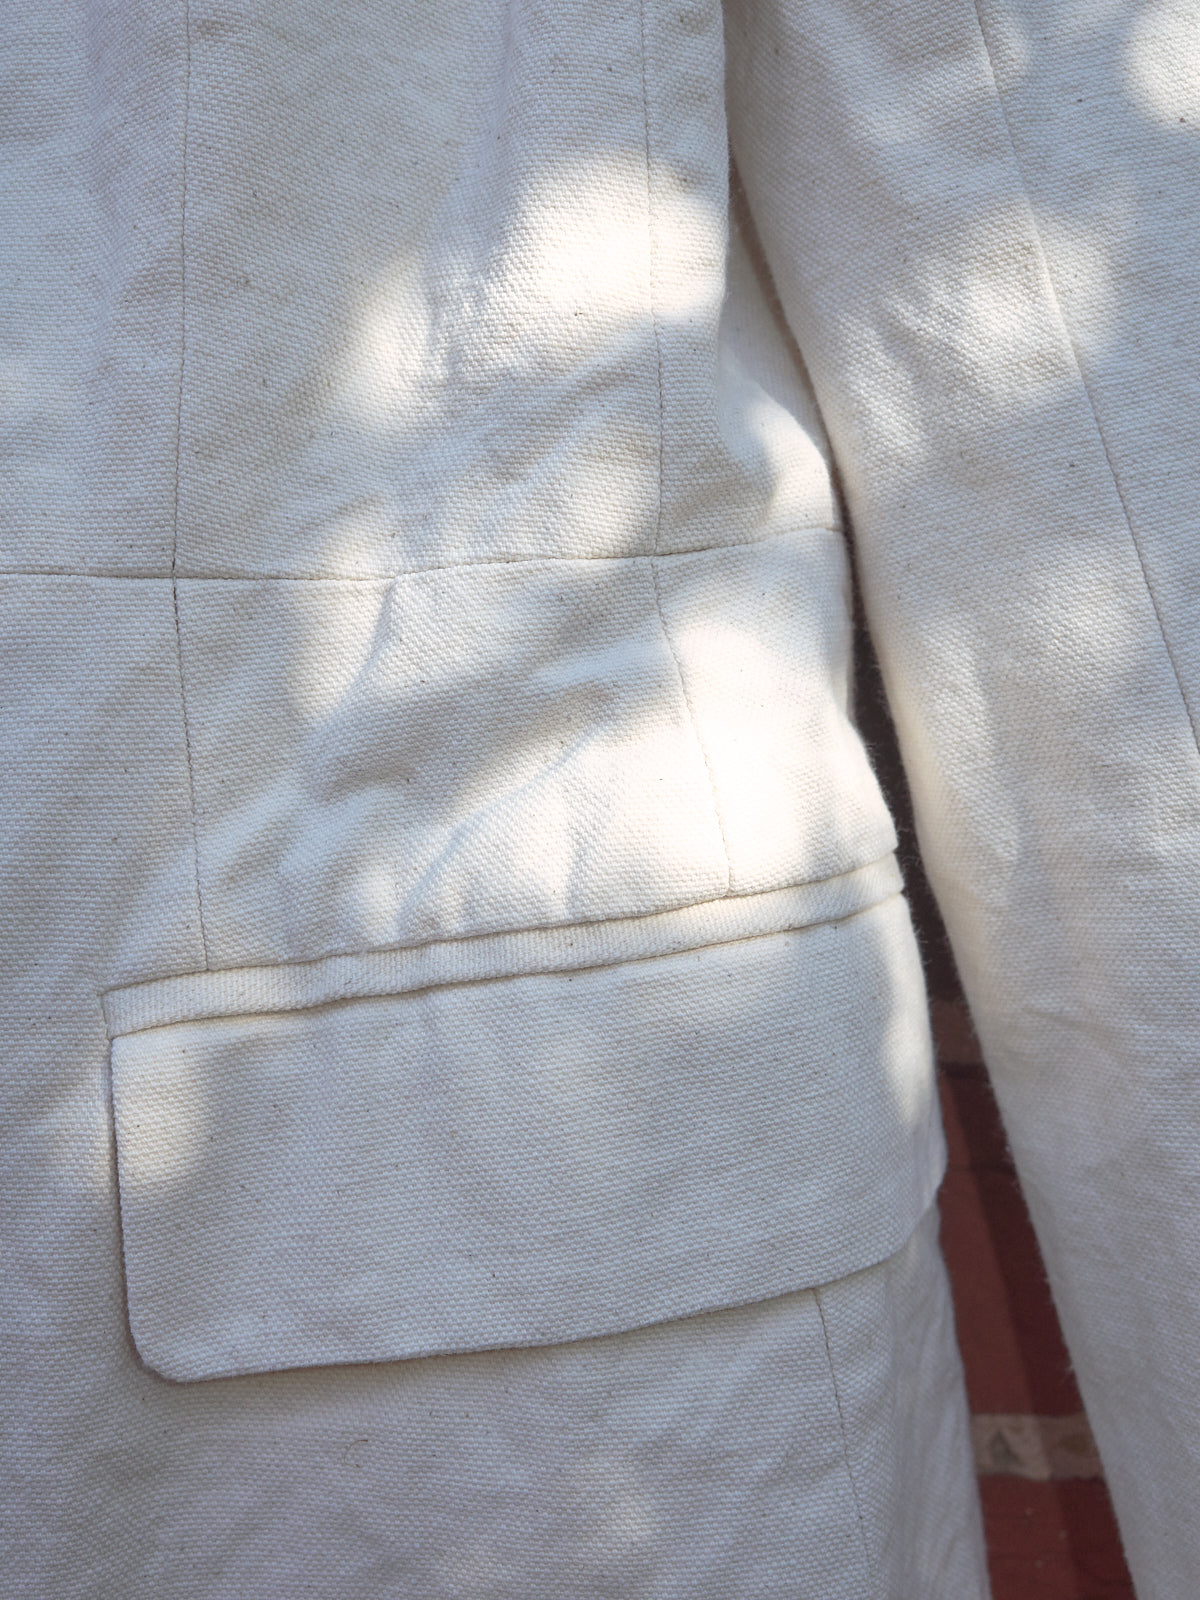 dirk van saene unbleached cotton canvas 'shrink to fit' blazer - SS1999